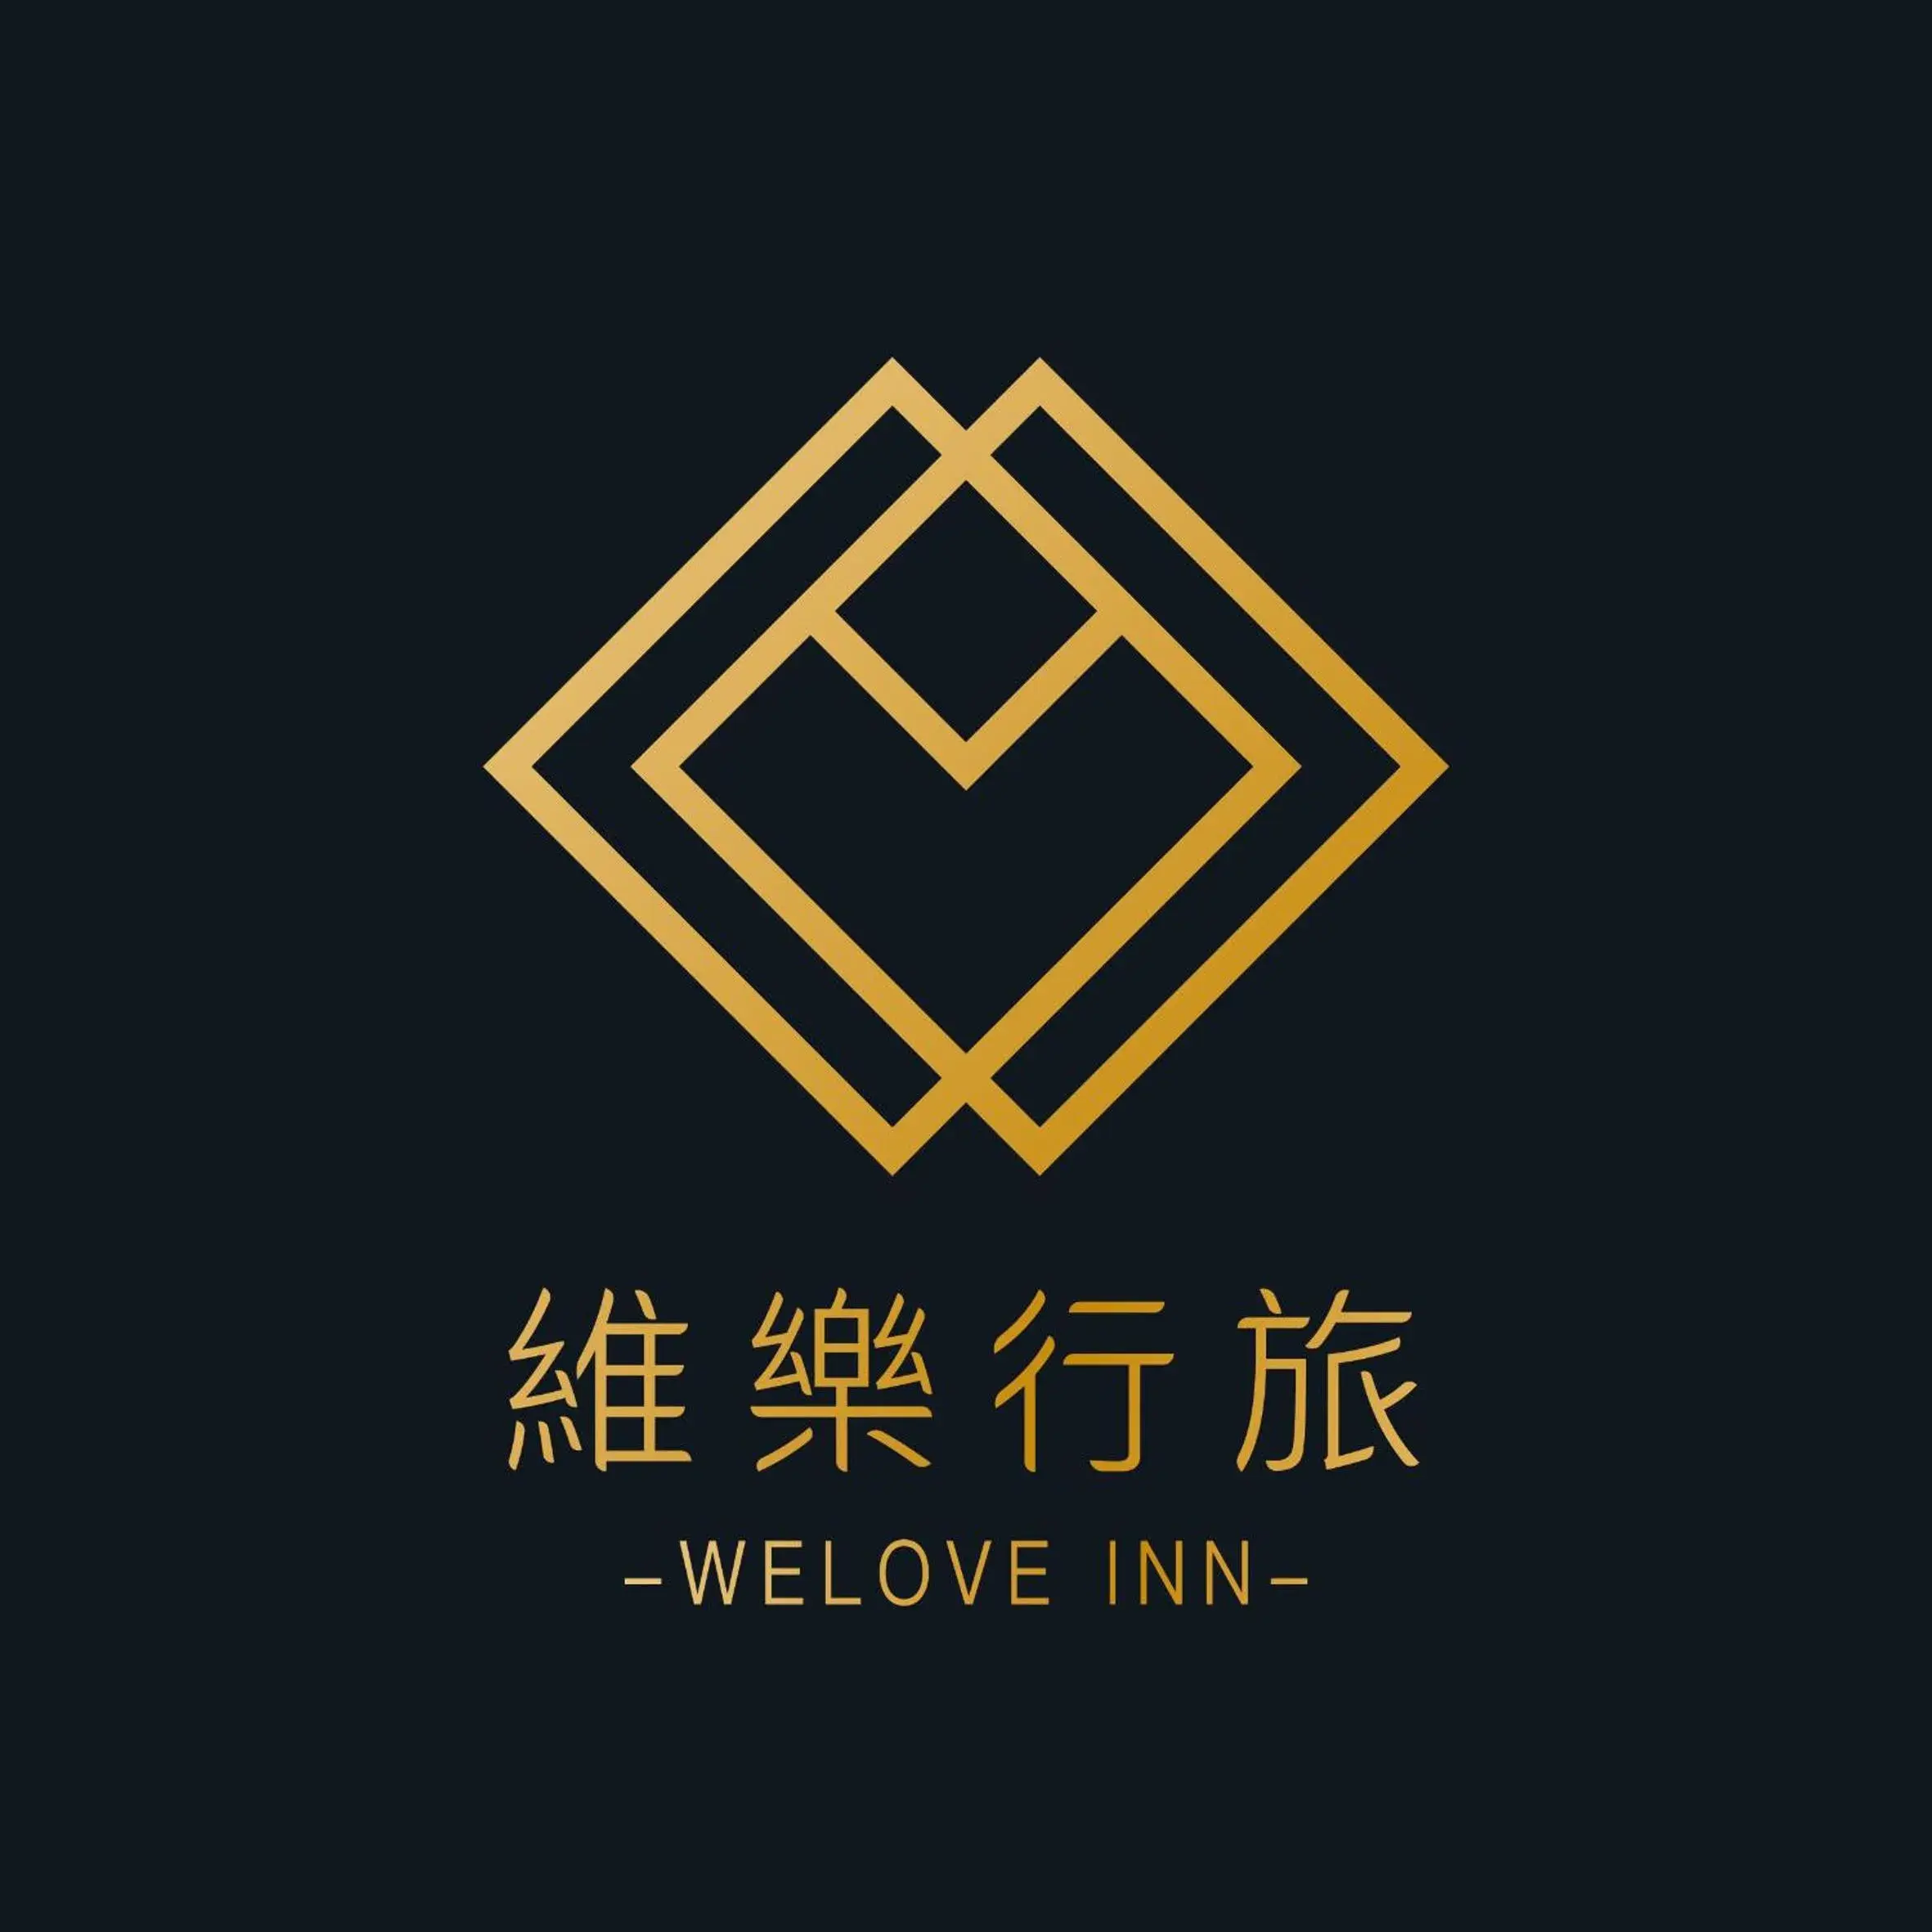 Property logo or sign, Property Logo/Sign in We Love Inn